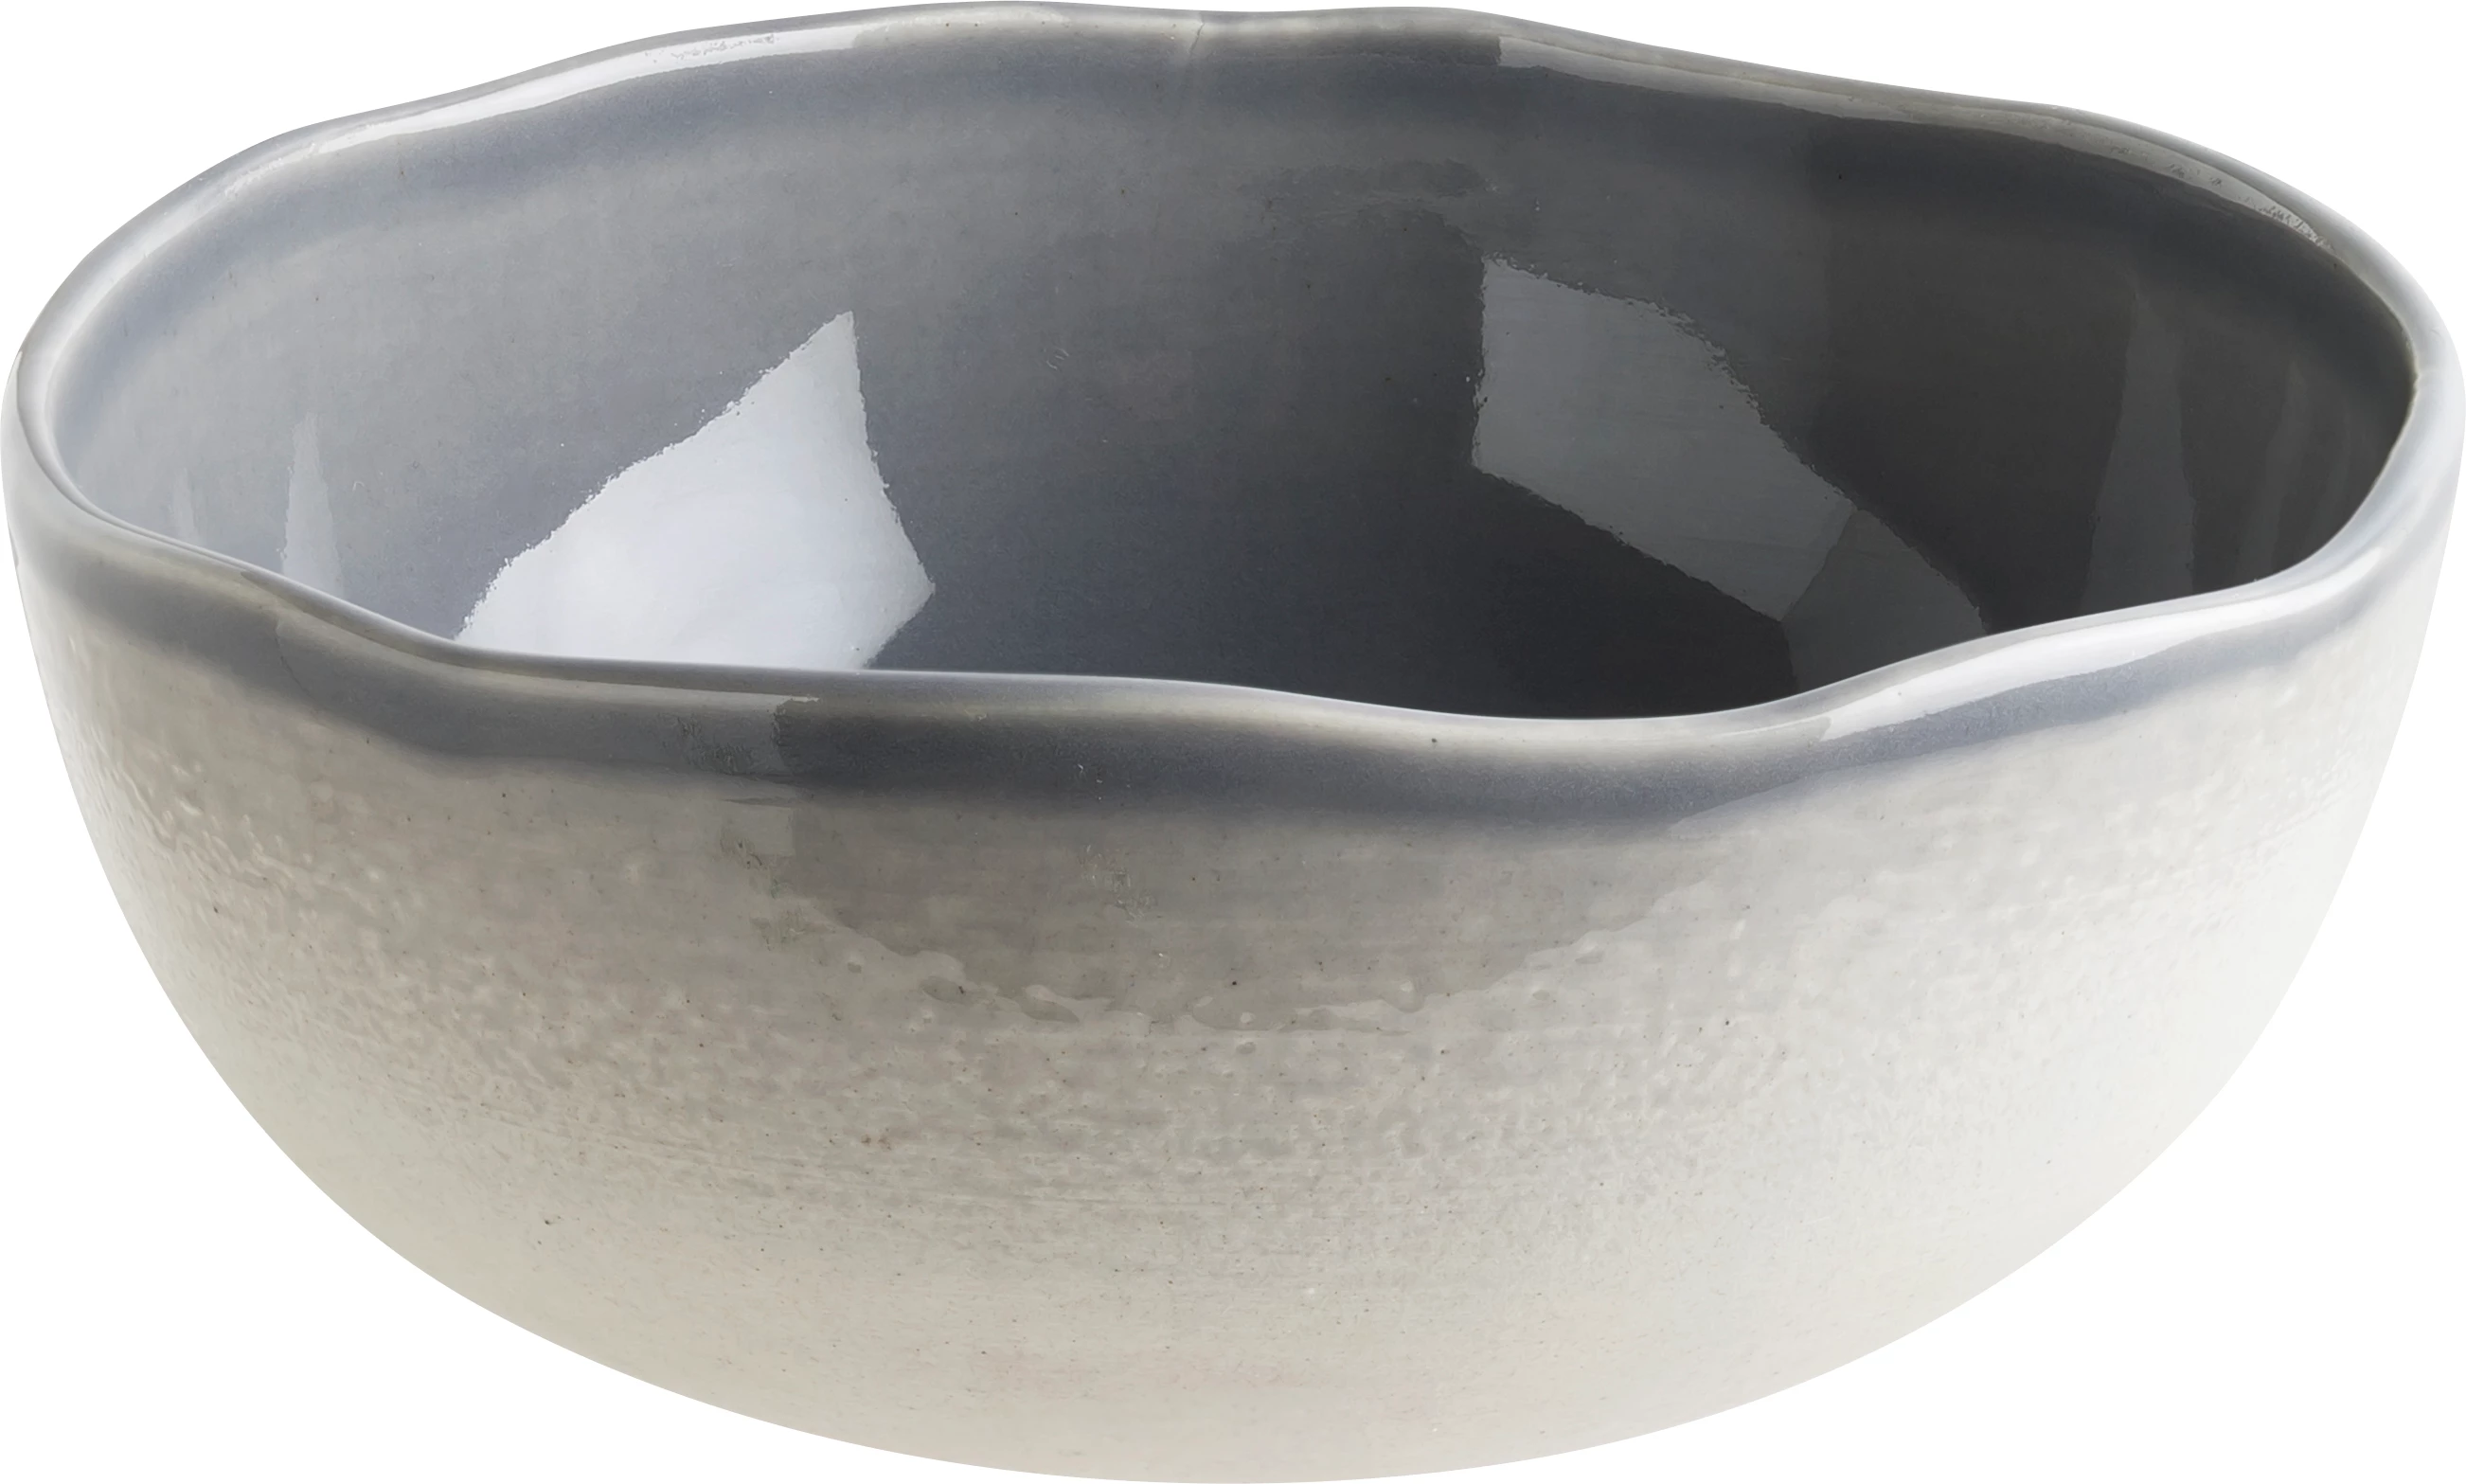 Bonna Cras skål, mørkegrå, 13 cl, ø10 cm